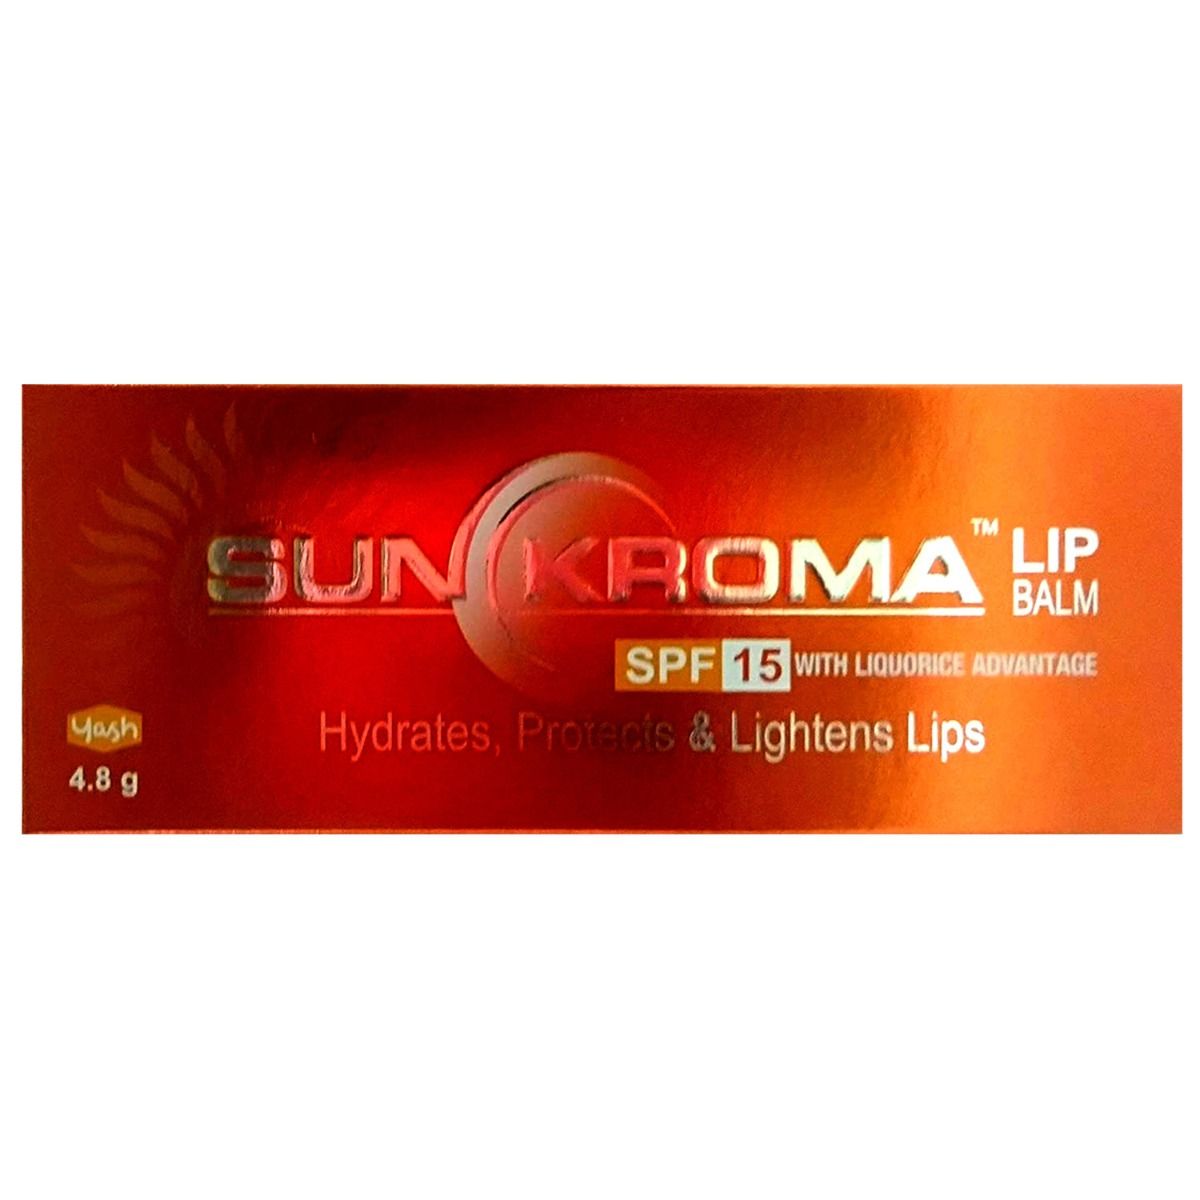 Sunkroma Lip Balm SPF 15, 4.8 gm, Pack of 1 